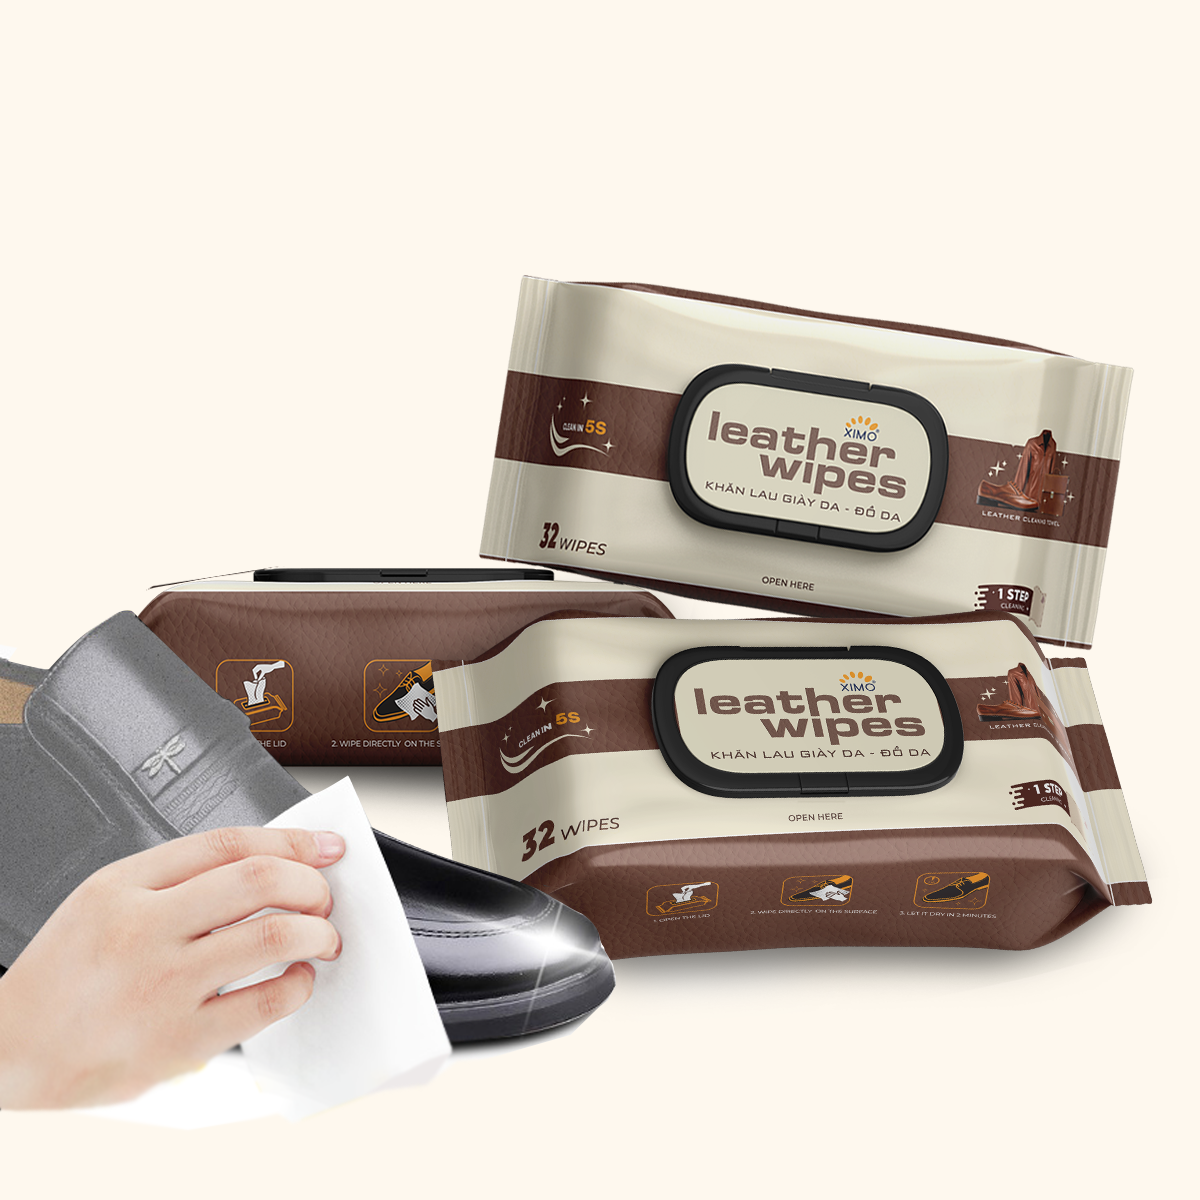 Khăn lau giày da đồ da cao cấp Ximo Leather Wipes 32 khăn giúp vệ sinh bề mặt đồ da